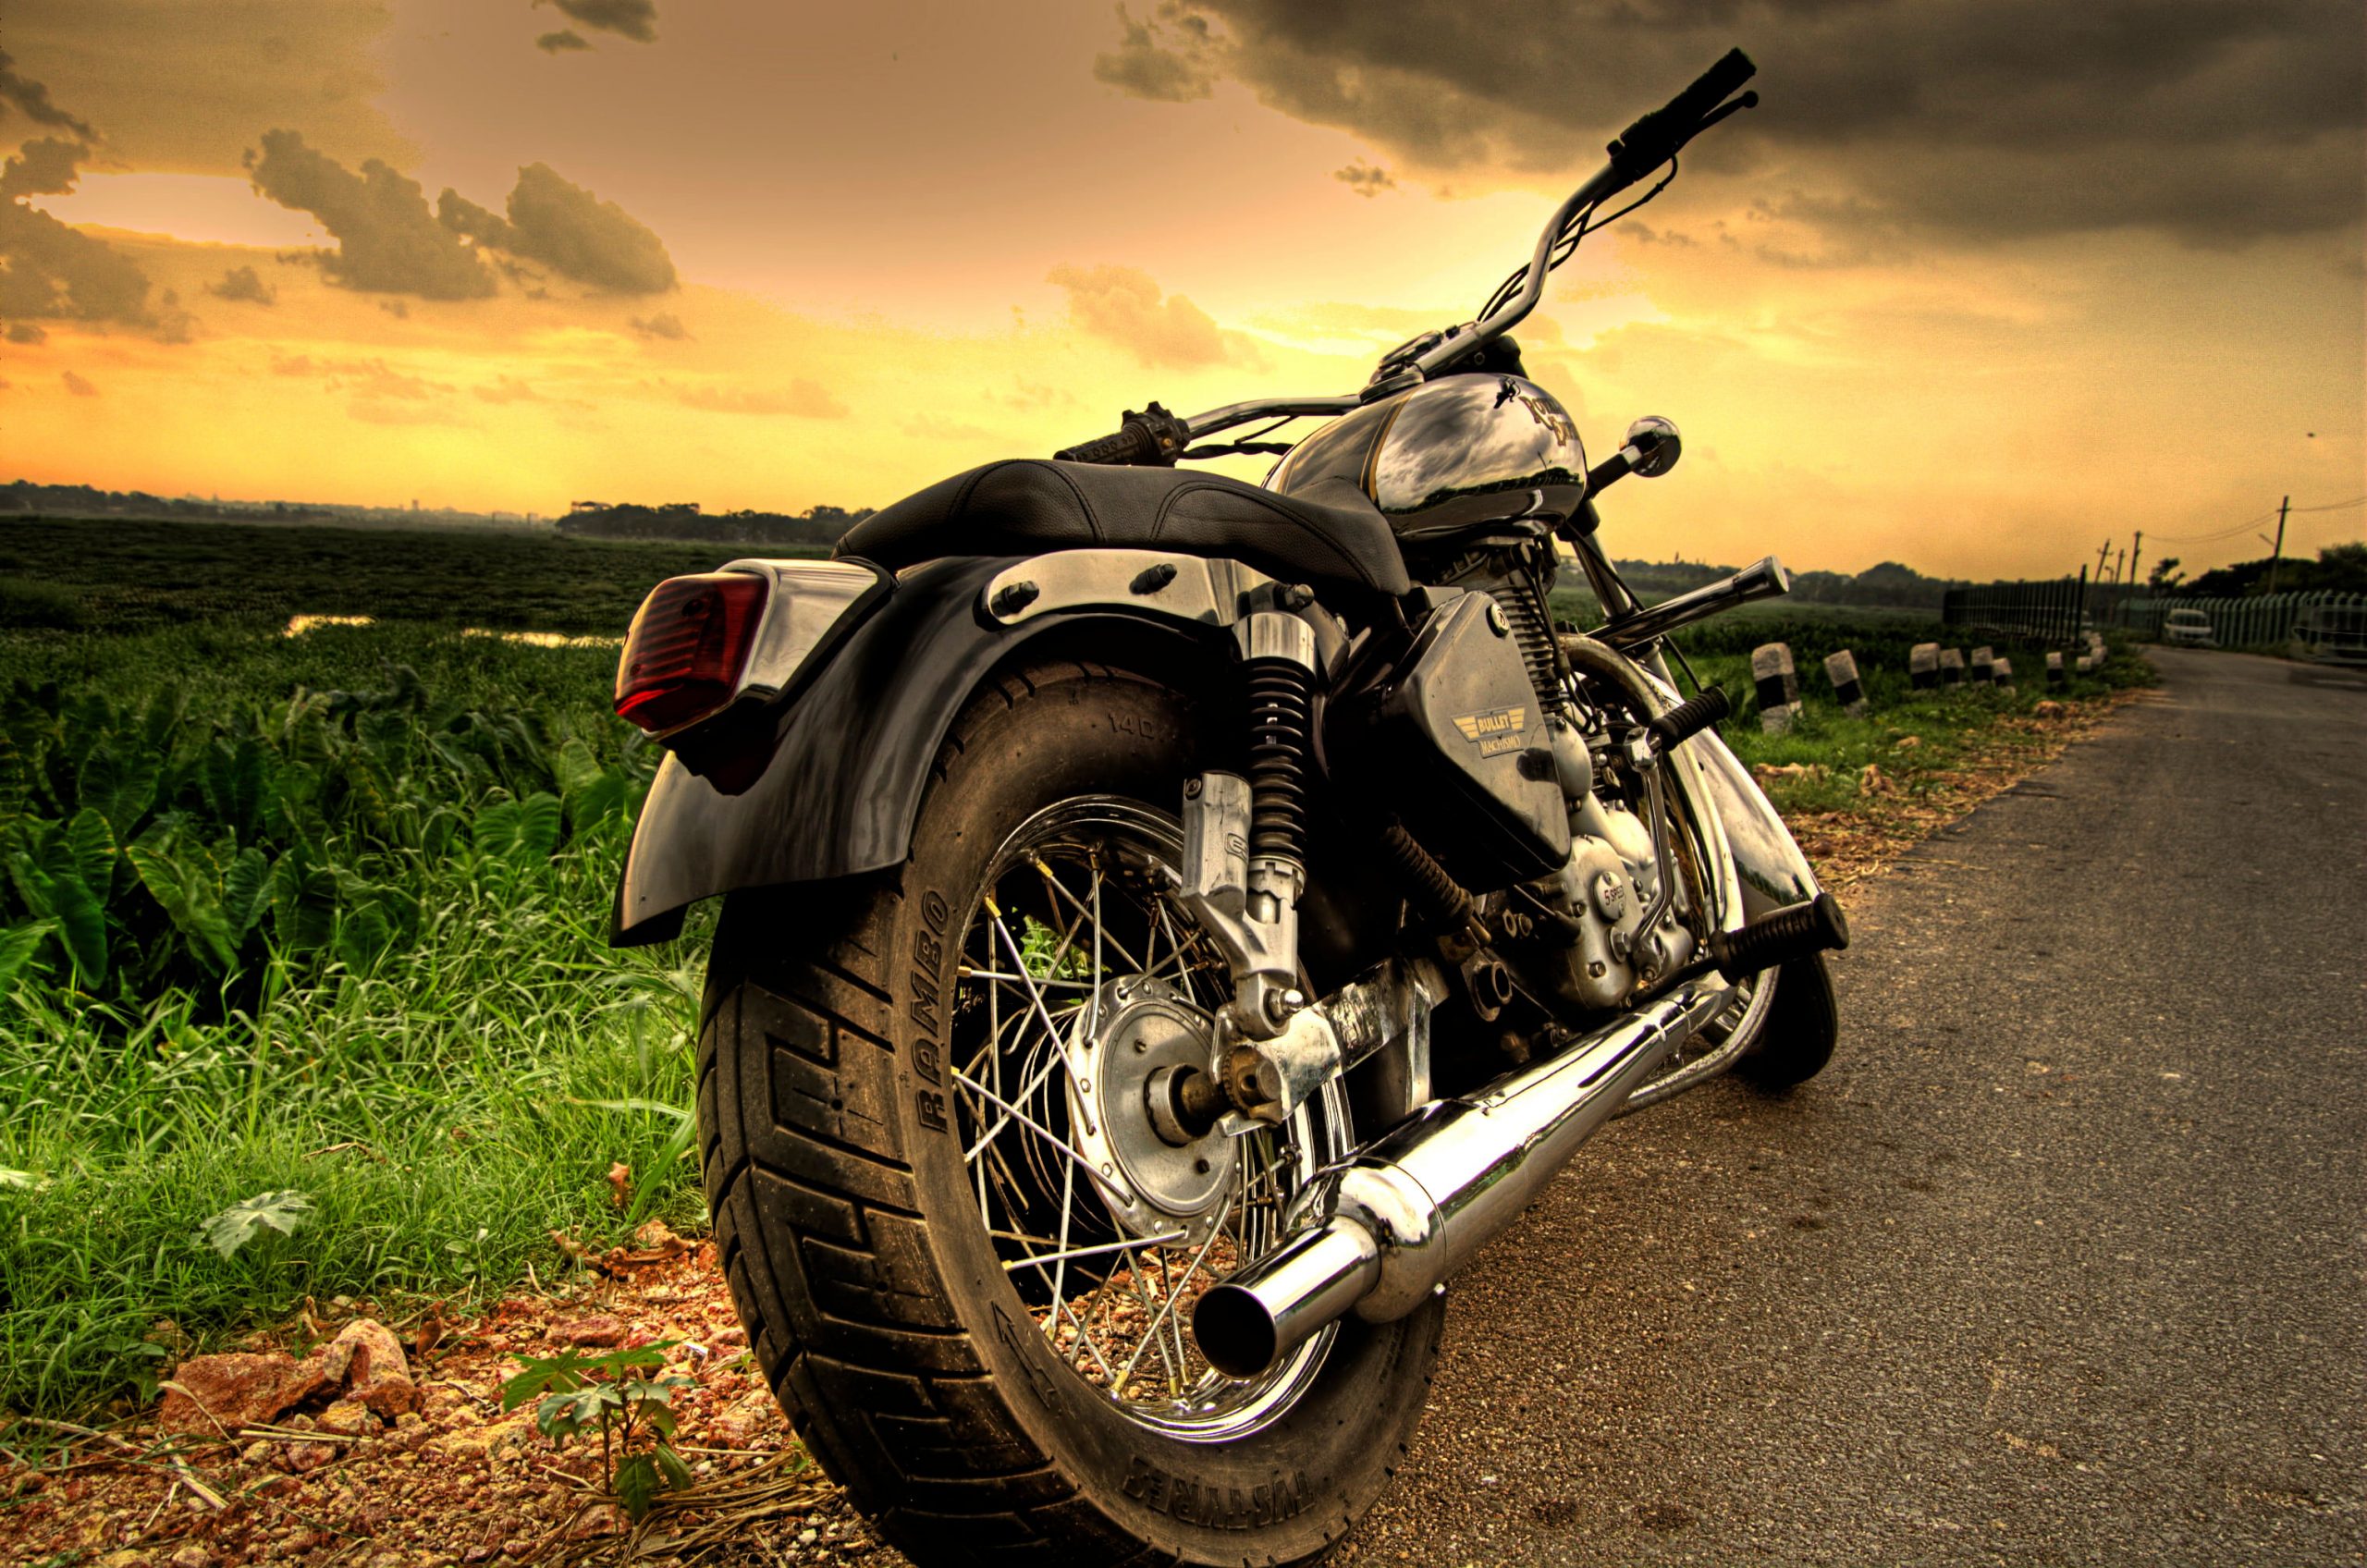 Silver cruiser motorcycle wallpaper, Royal Enfield, motorbike, hdr, bangalore